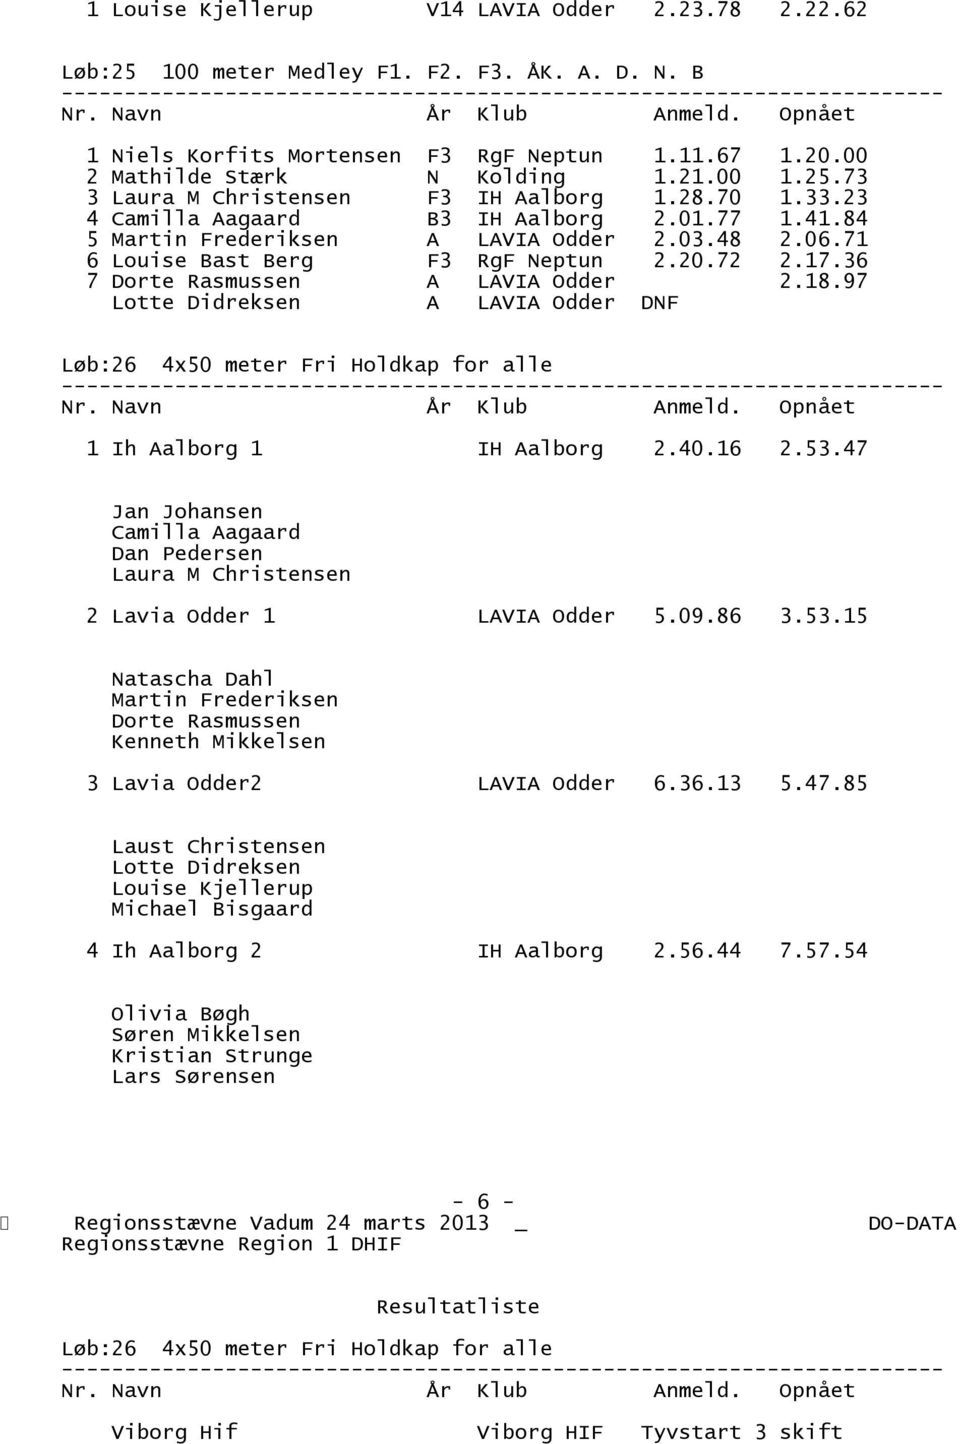 97 Lotte Didreksen A LAVIA Odder DNF Løb:26 4x50 meter Fri Holdkap for alle 1 Ih Aalborg 1 IH Aalborg 2.40.16 2.53.